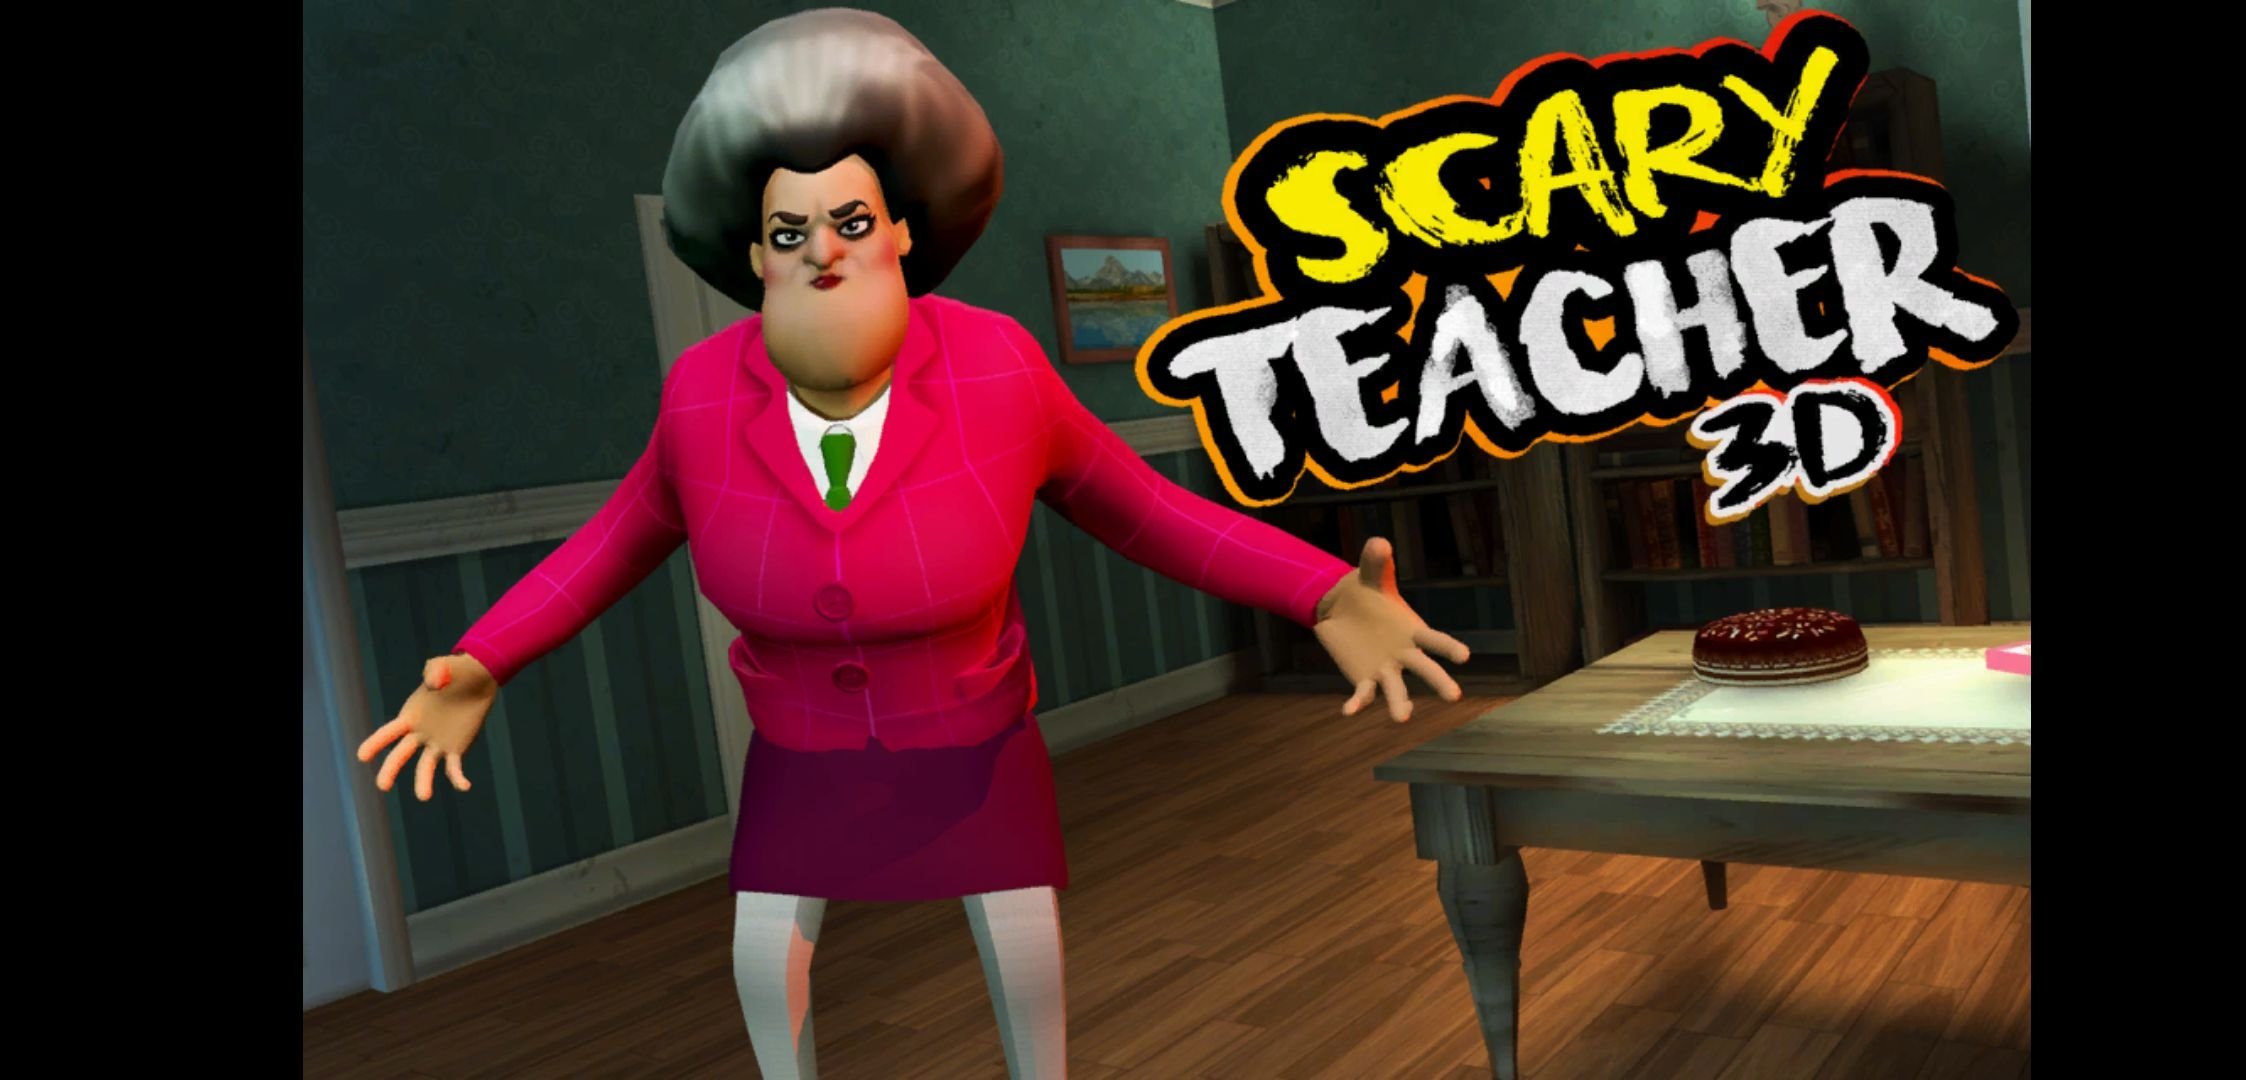 A PROFESSORA VIU TUDO * scary teacher * 